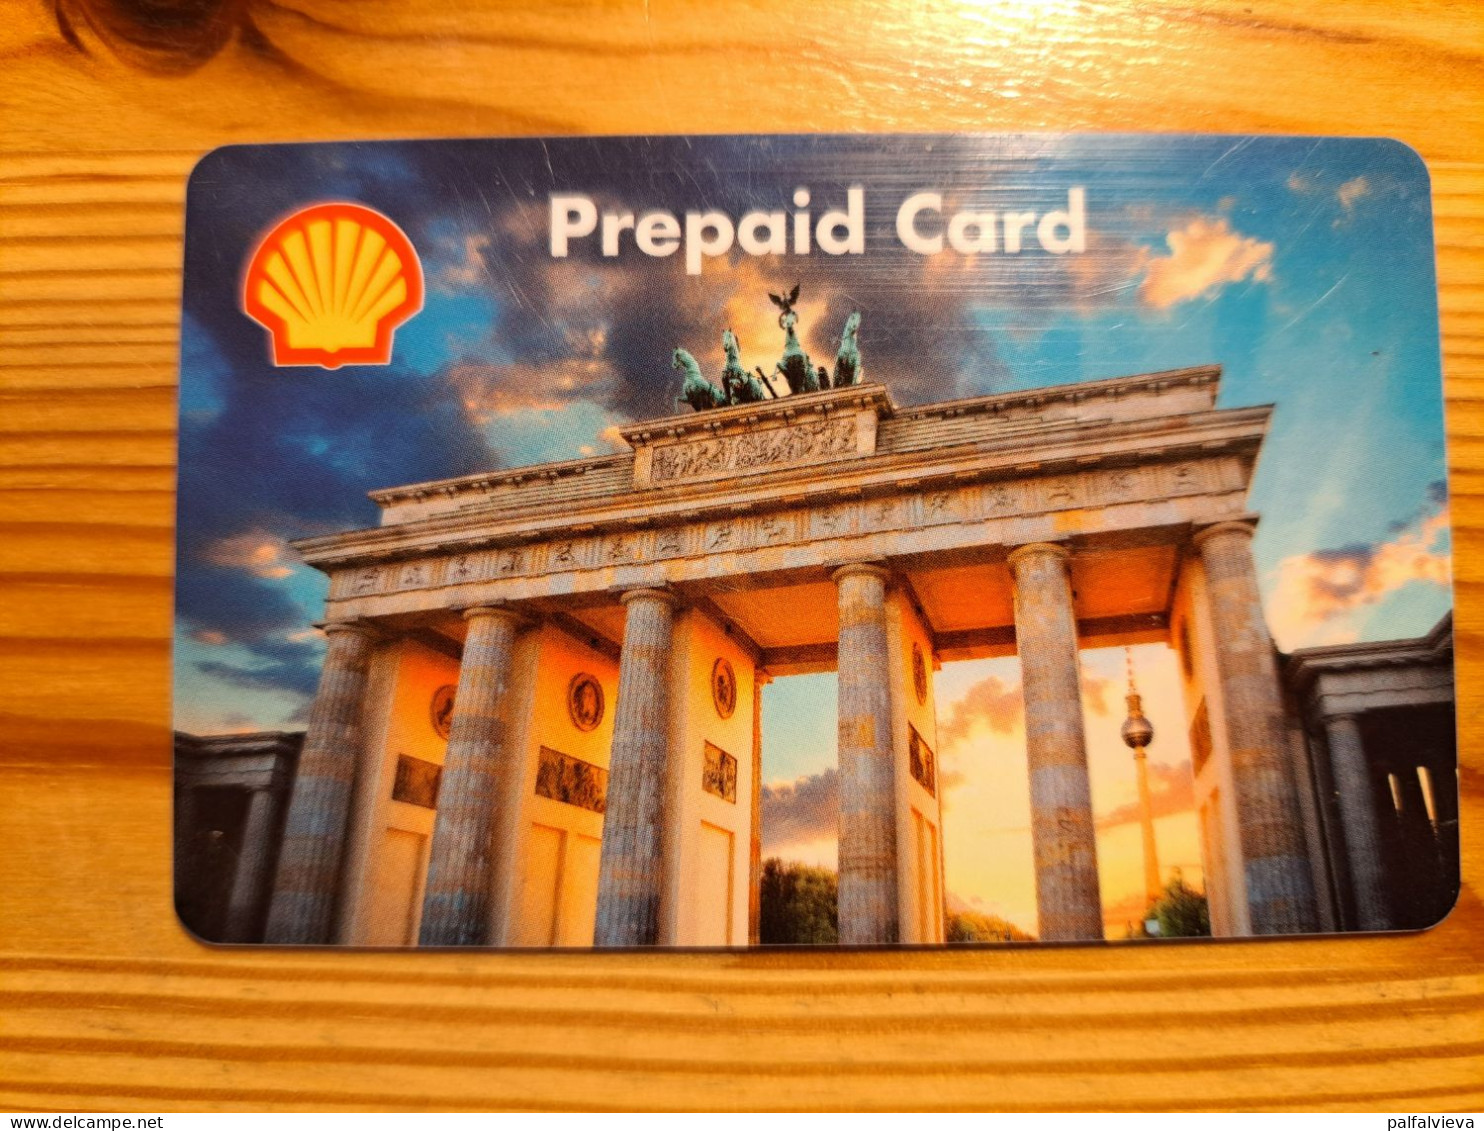 Shell Gift Card Germany - Berlin, Brandenburger Tor - Gift Cards